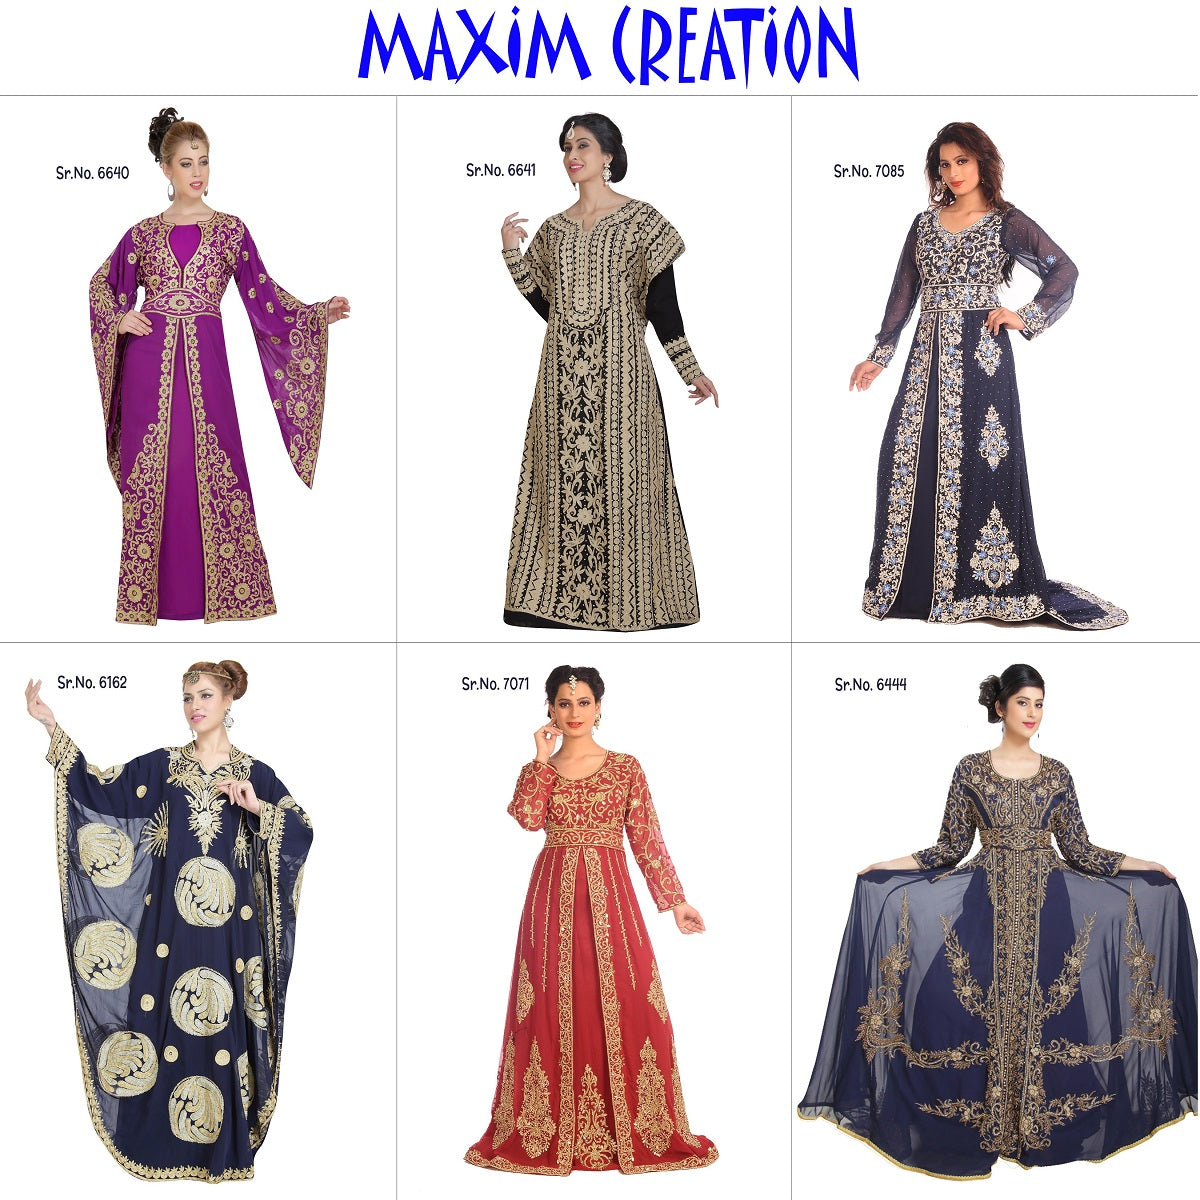 Embroidered Jellabiya Maxi Dress - Maxim Creation